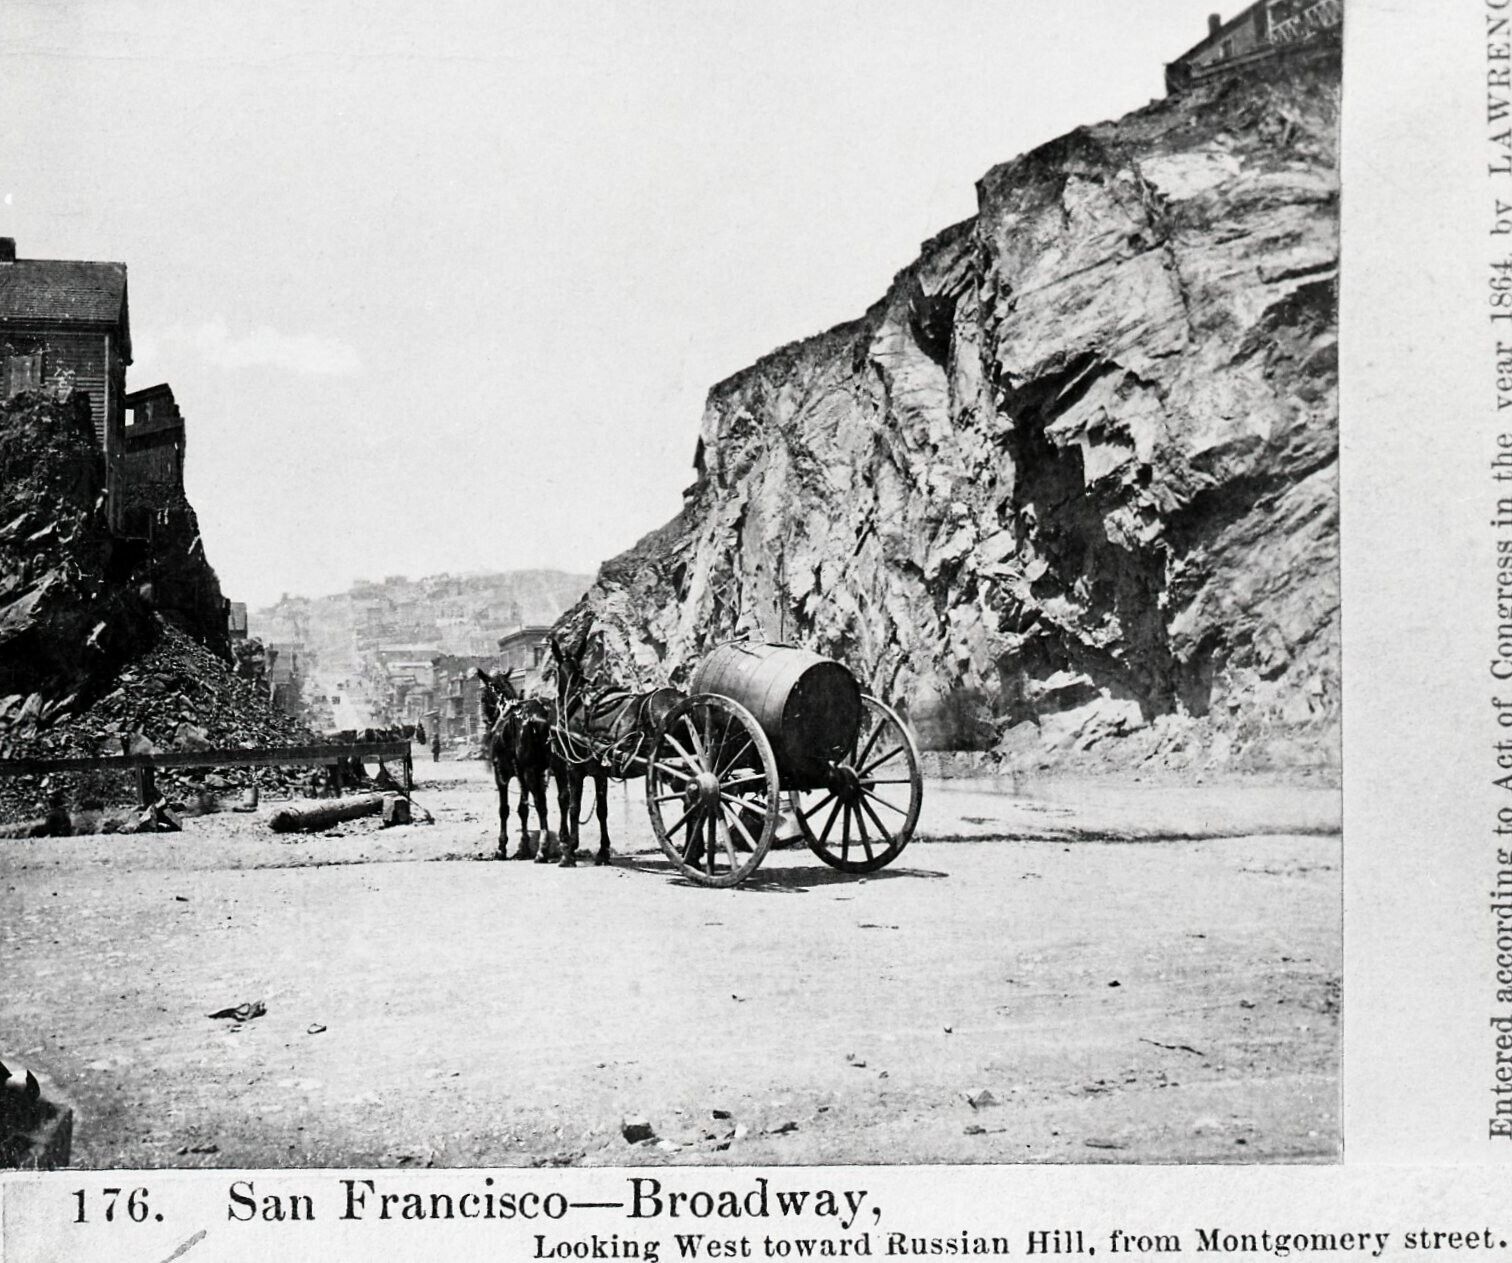 1864 SAN FRANCISCO EXCAVATION BROADWAY DEEP CUT w/MULE-DRAWN WATER CART~NEGATIVE